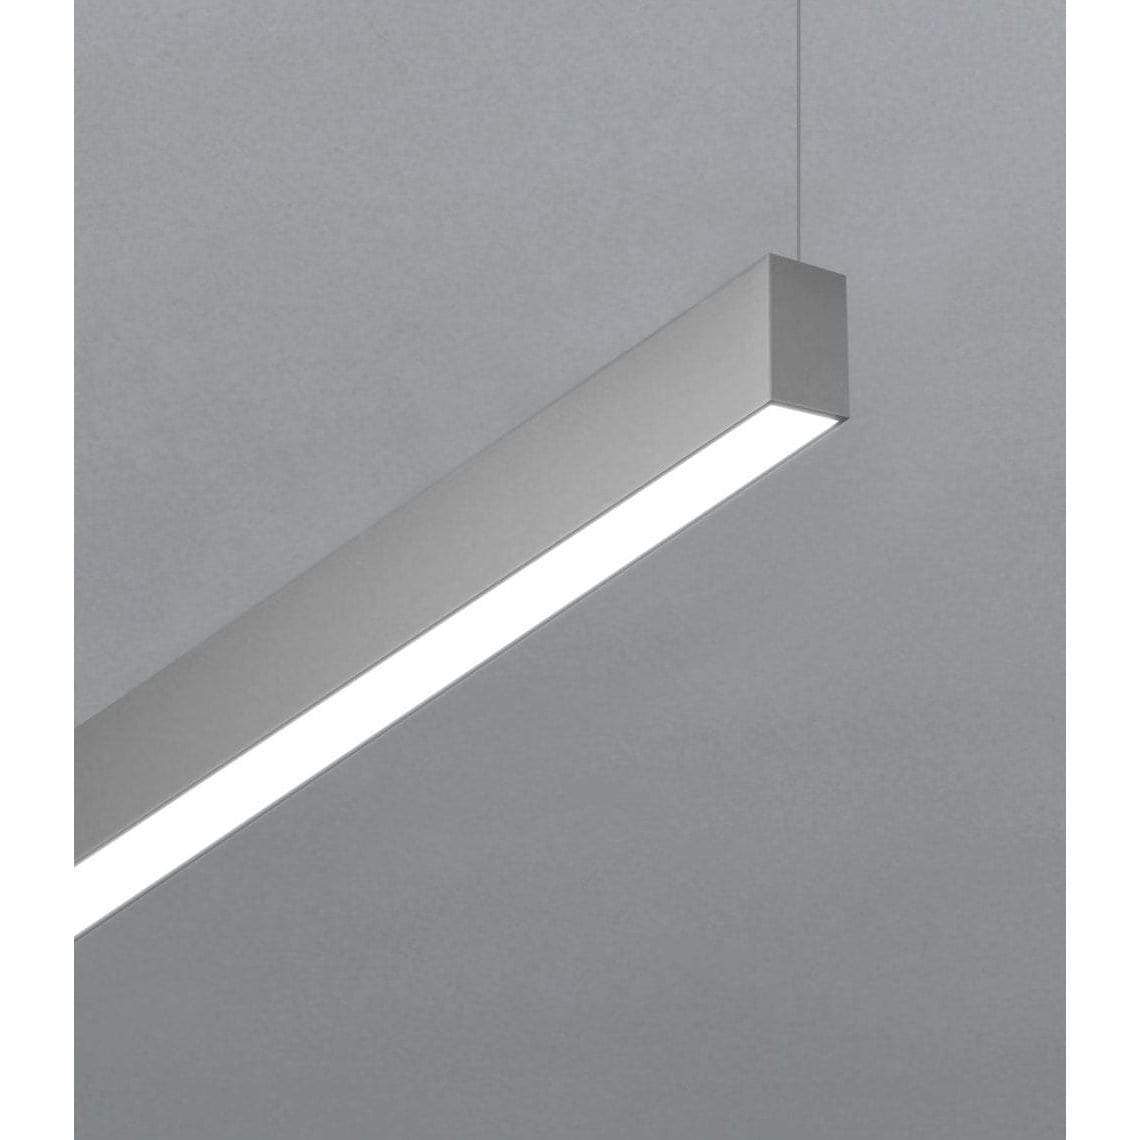 POE Texas Lighting Denton Suspended Linear PoE Lights - Sample 1.3" x 2' Linear Diffuser 2 ft, 3000K (Wall)